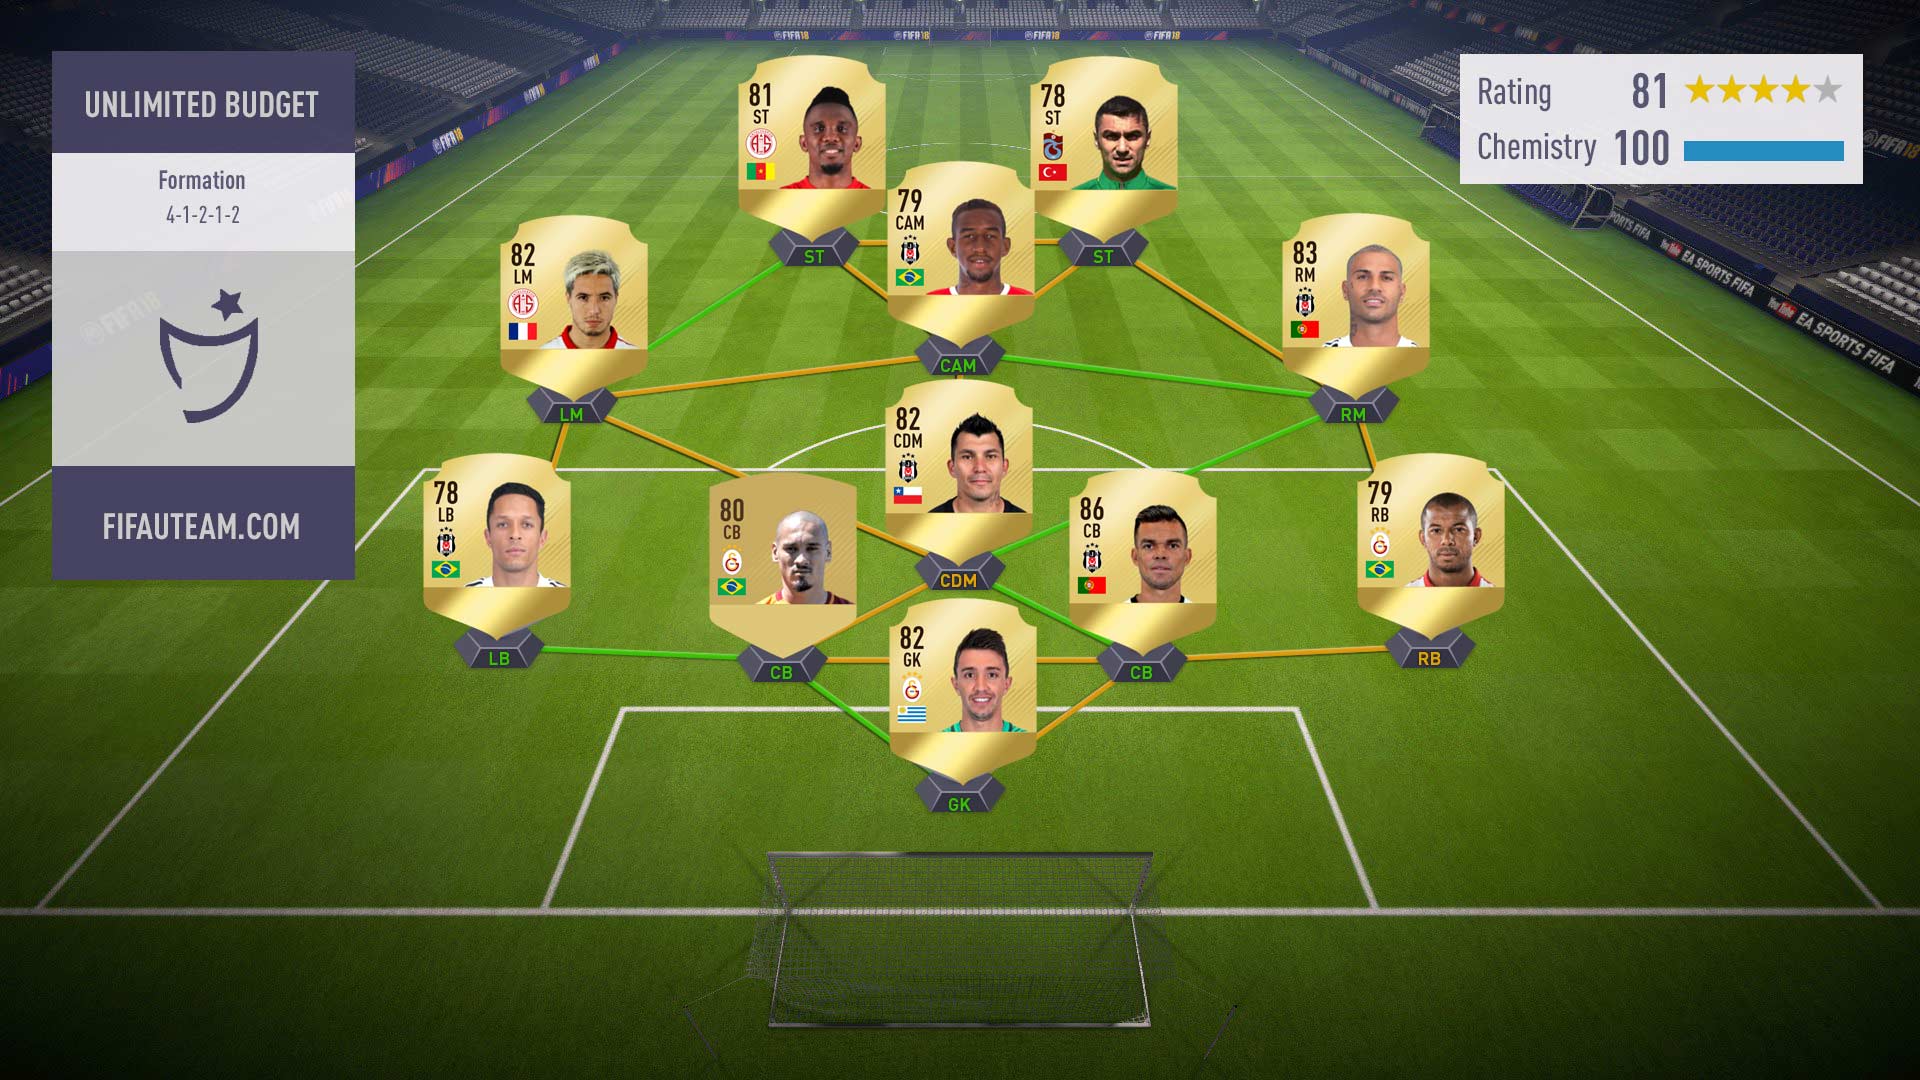 FIFA 18 Süper Lig Squad Guide for FIFA 18 Ultimate Team